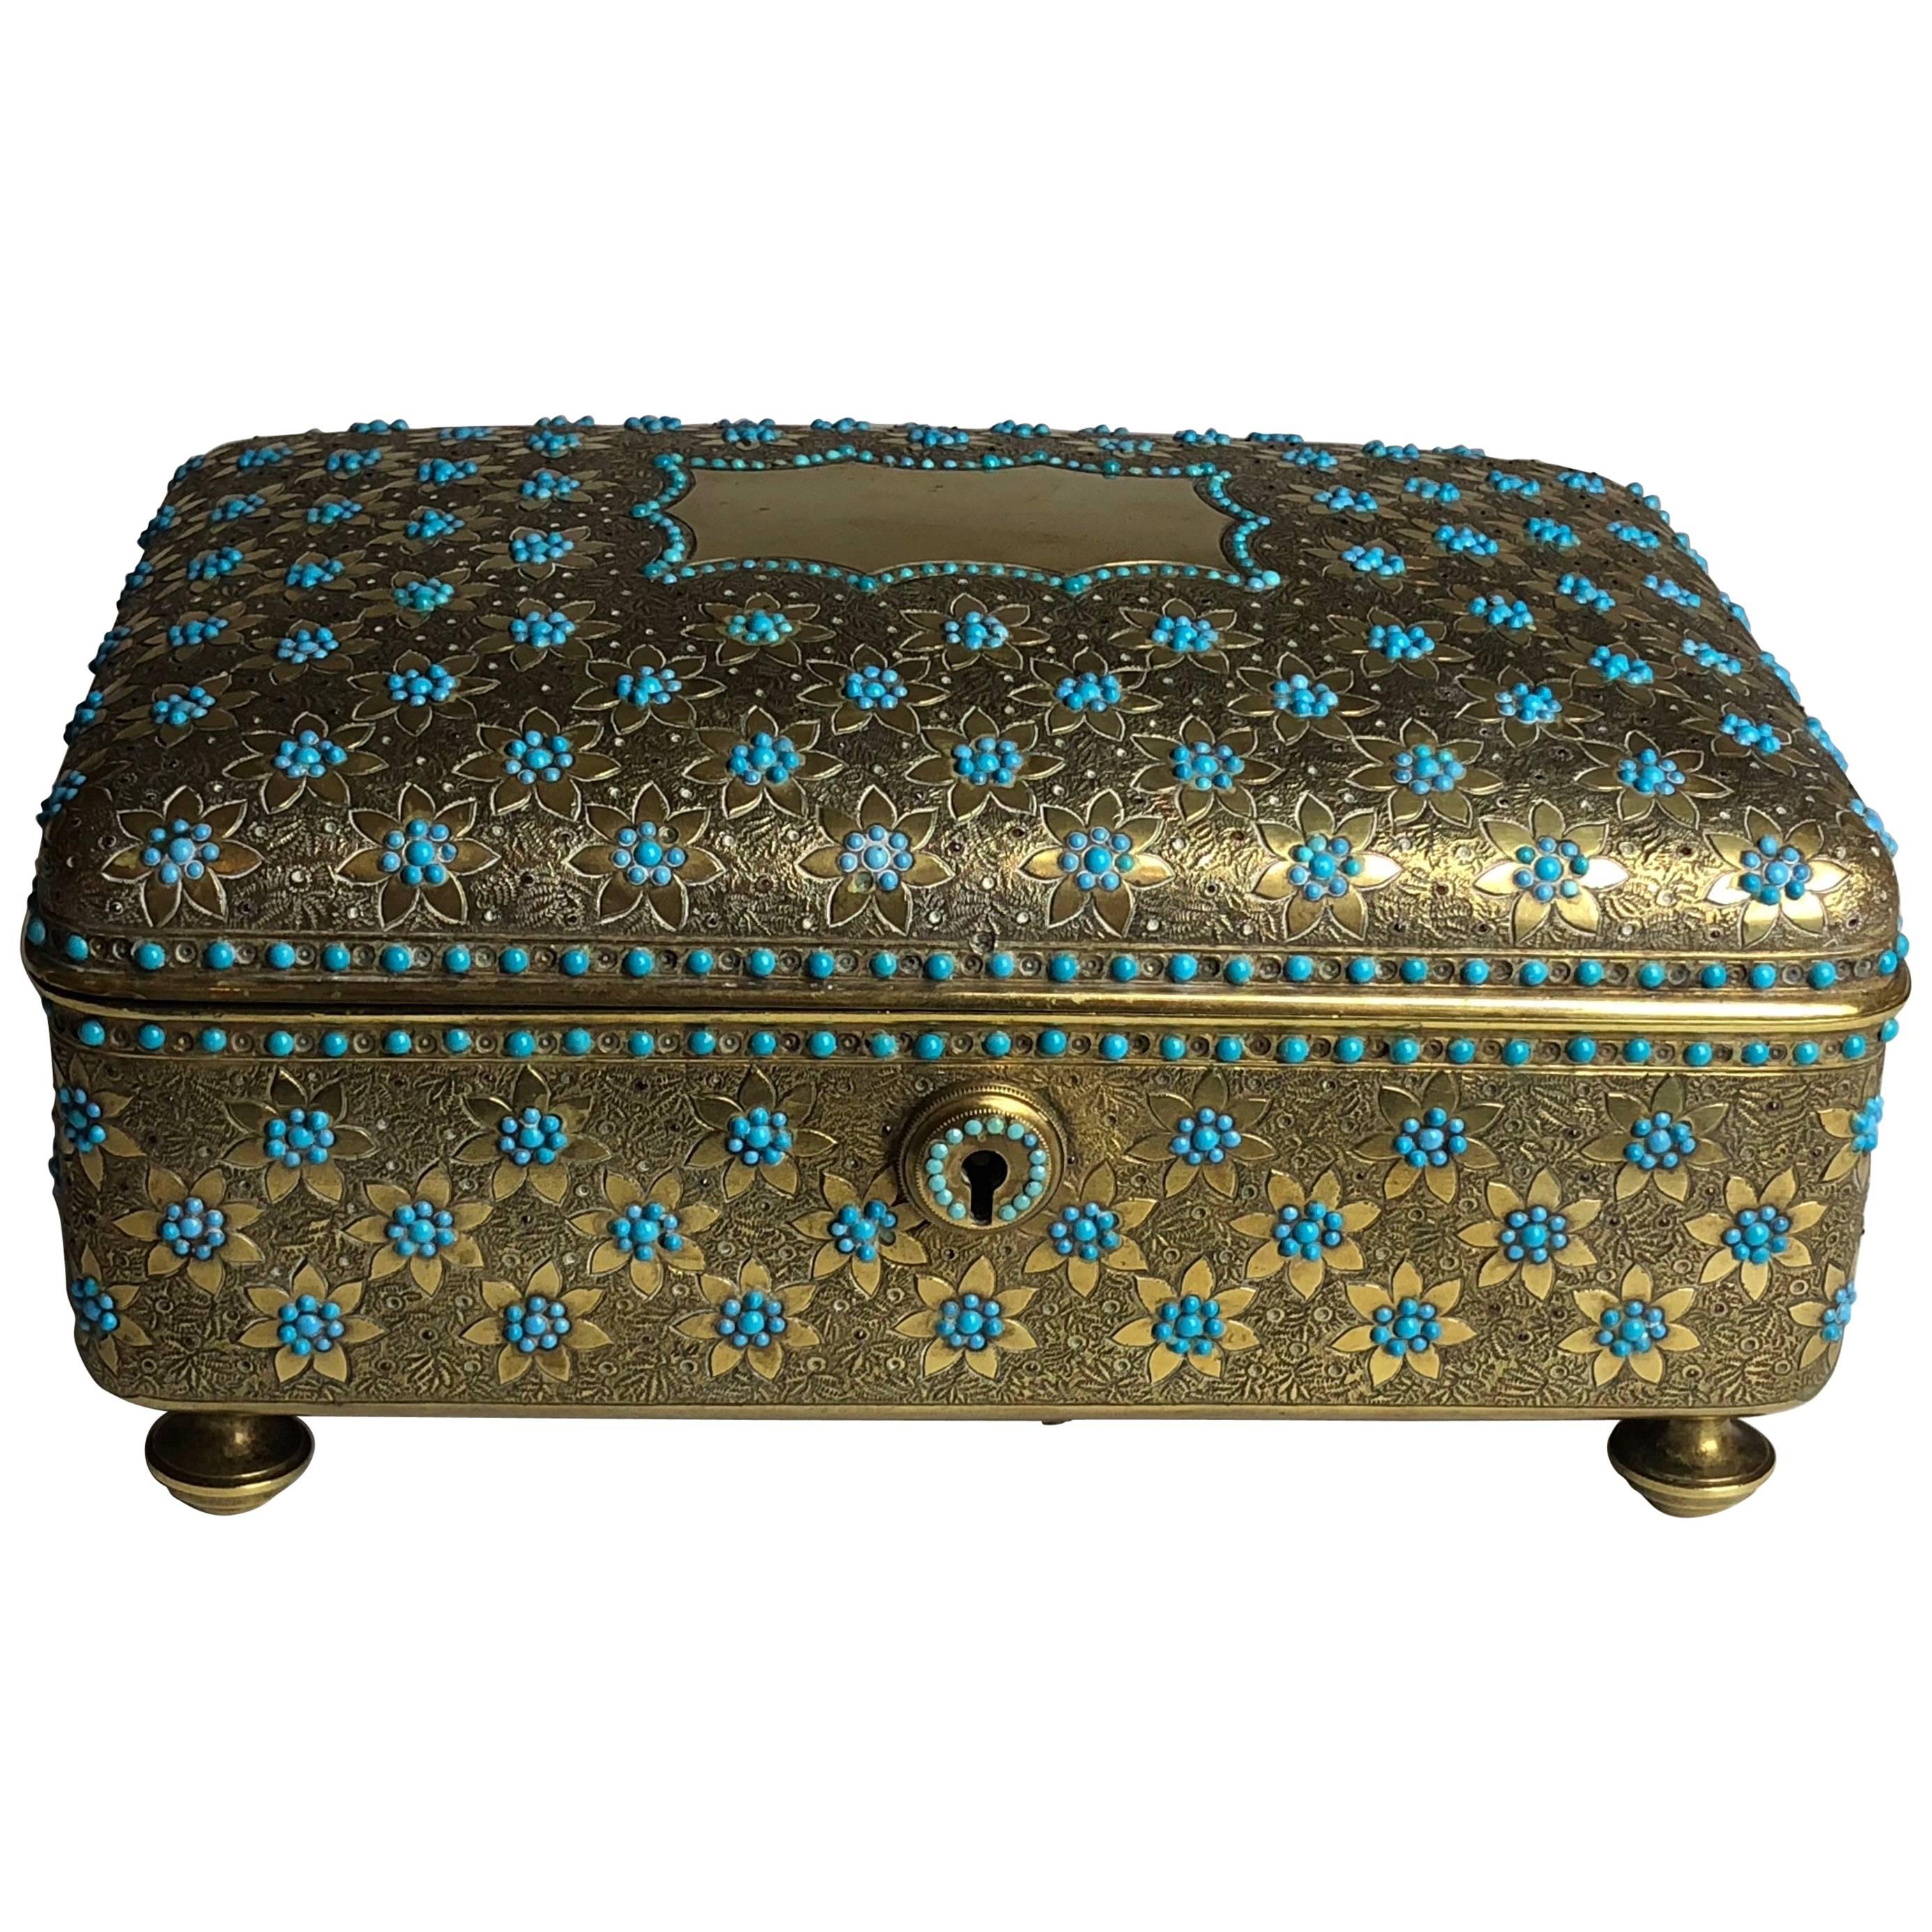 19th Century Ormolu Box Inlaid with Turquoise